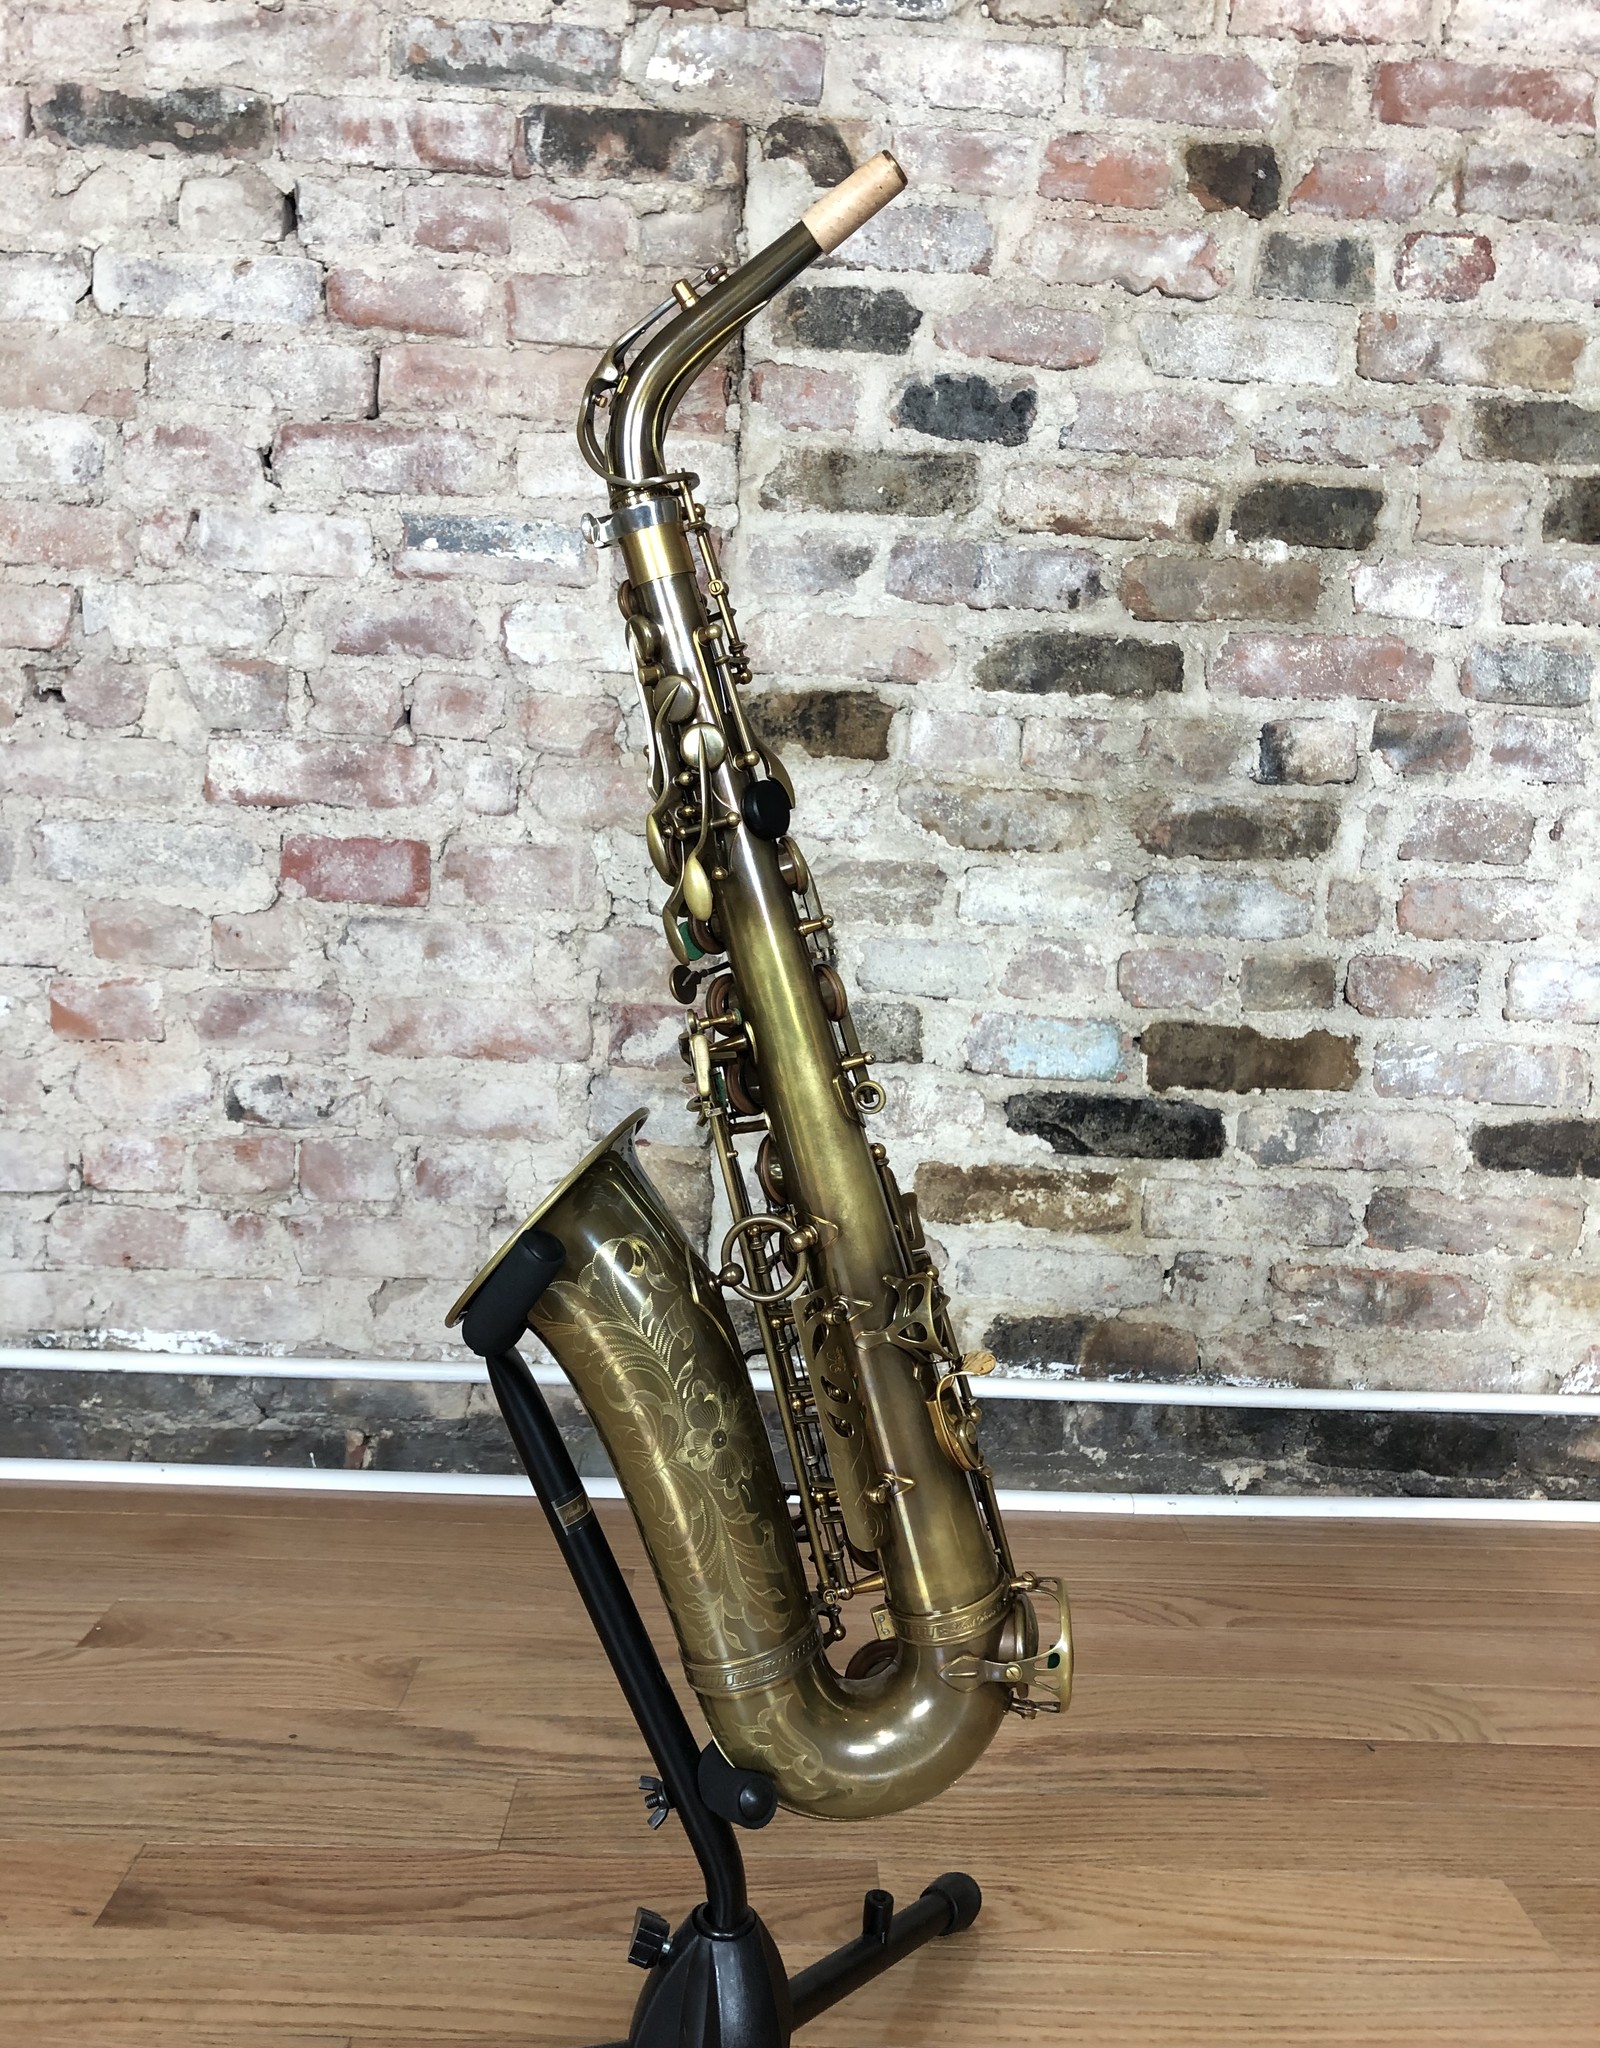 Ishimori Ishimori Wood Stone “New Vintage” Alto saxophone AF Model with High F# Key